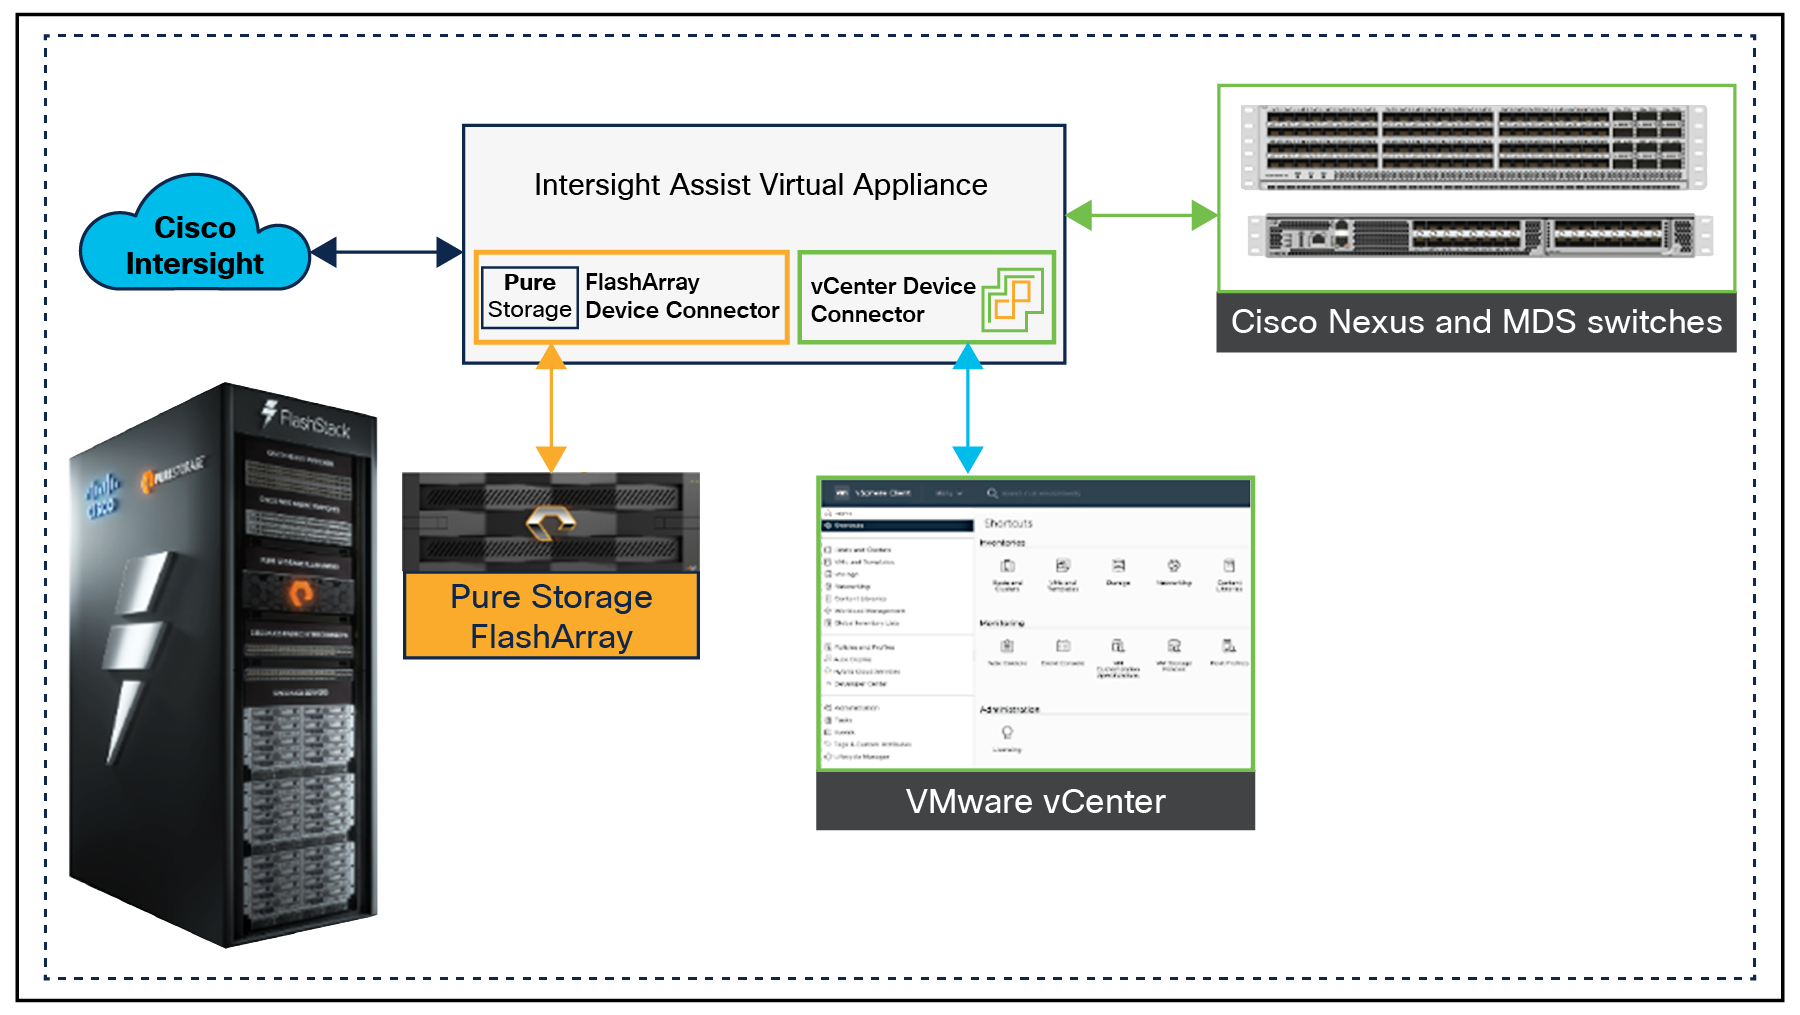 Managing Pure Storage FlashArray and VMware vCenter through Cisco Intersight using Intersight Assist